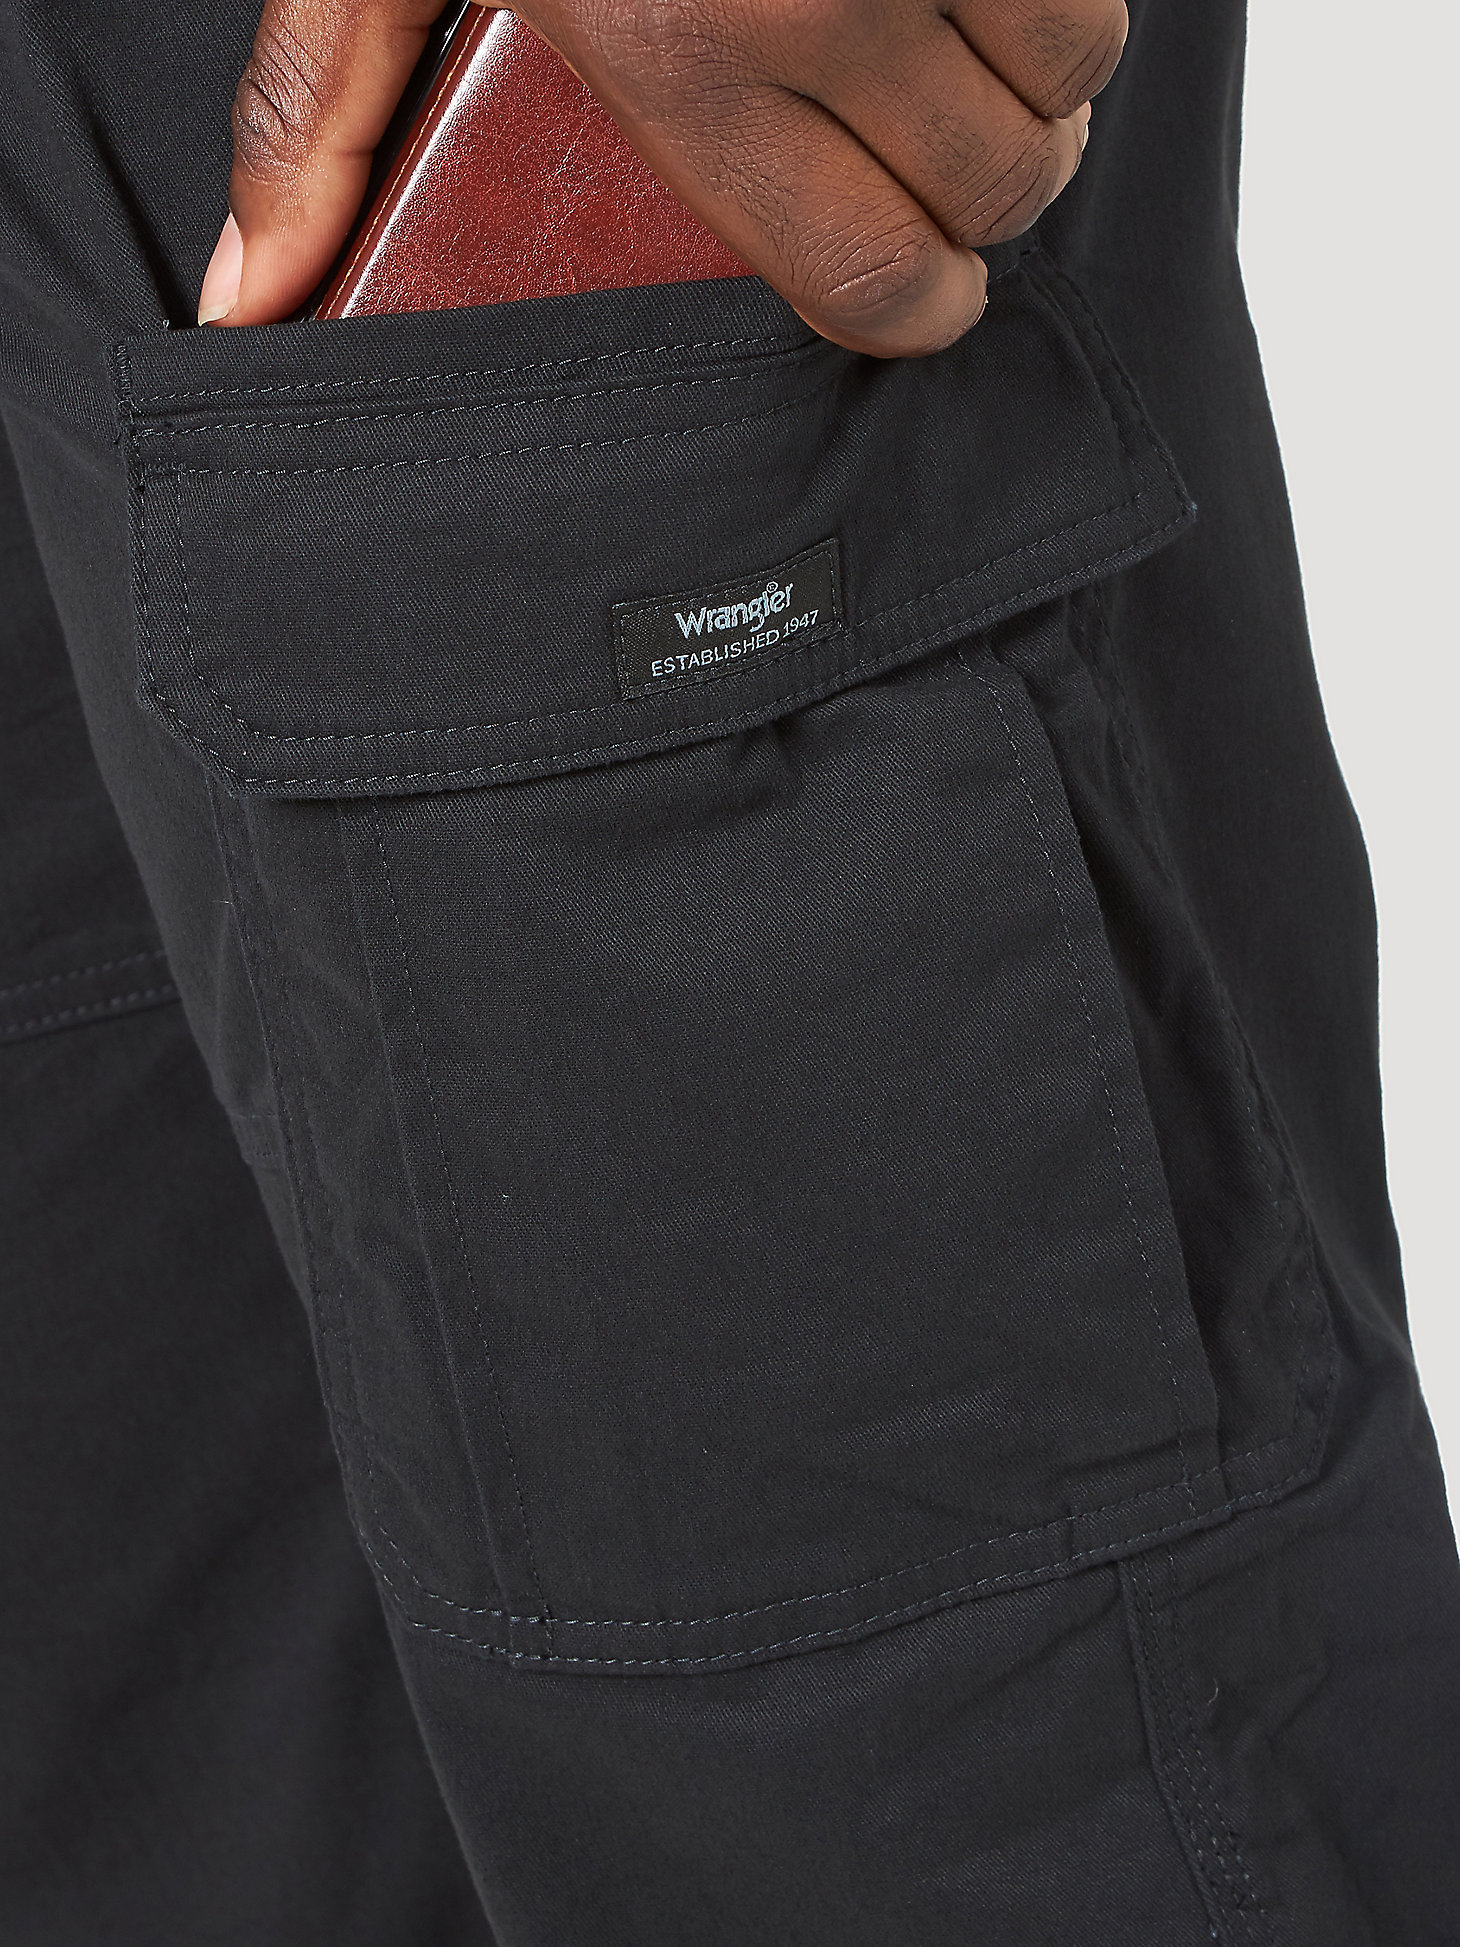 Wrangler® Men's Five Star Premium Relaxed Fit Flex Cargo Pant in Black alternative view 5